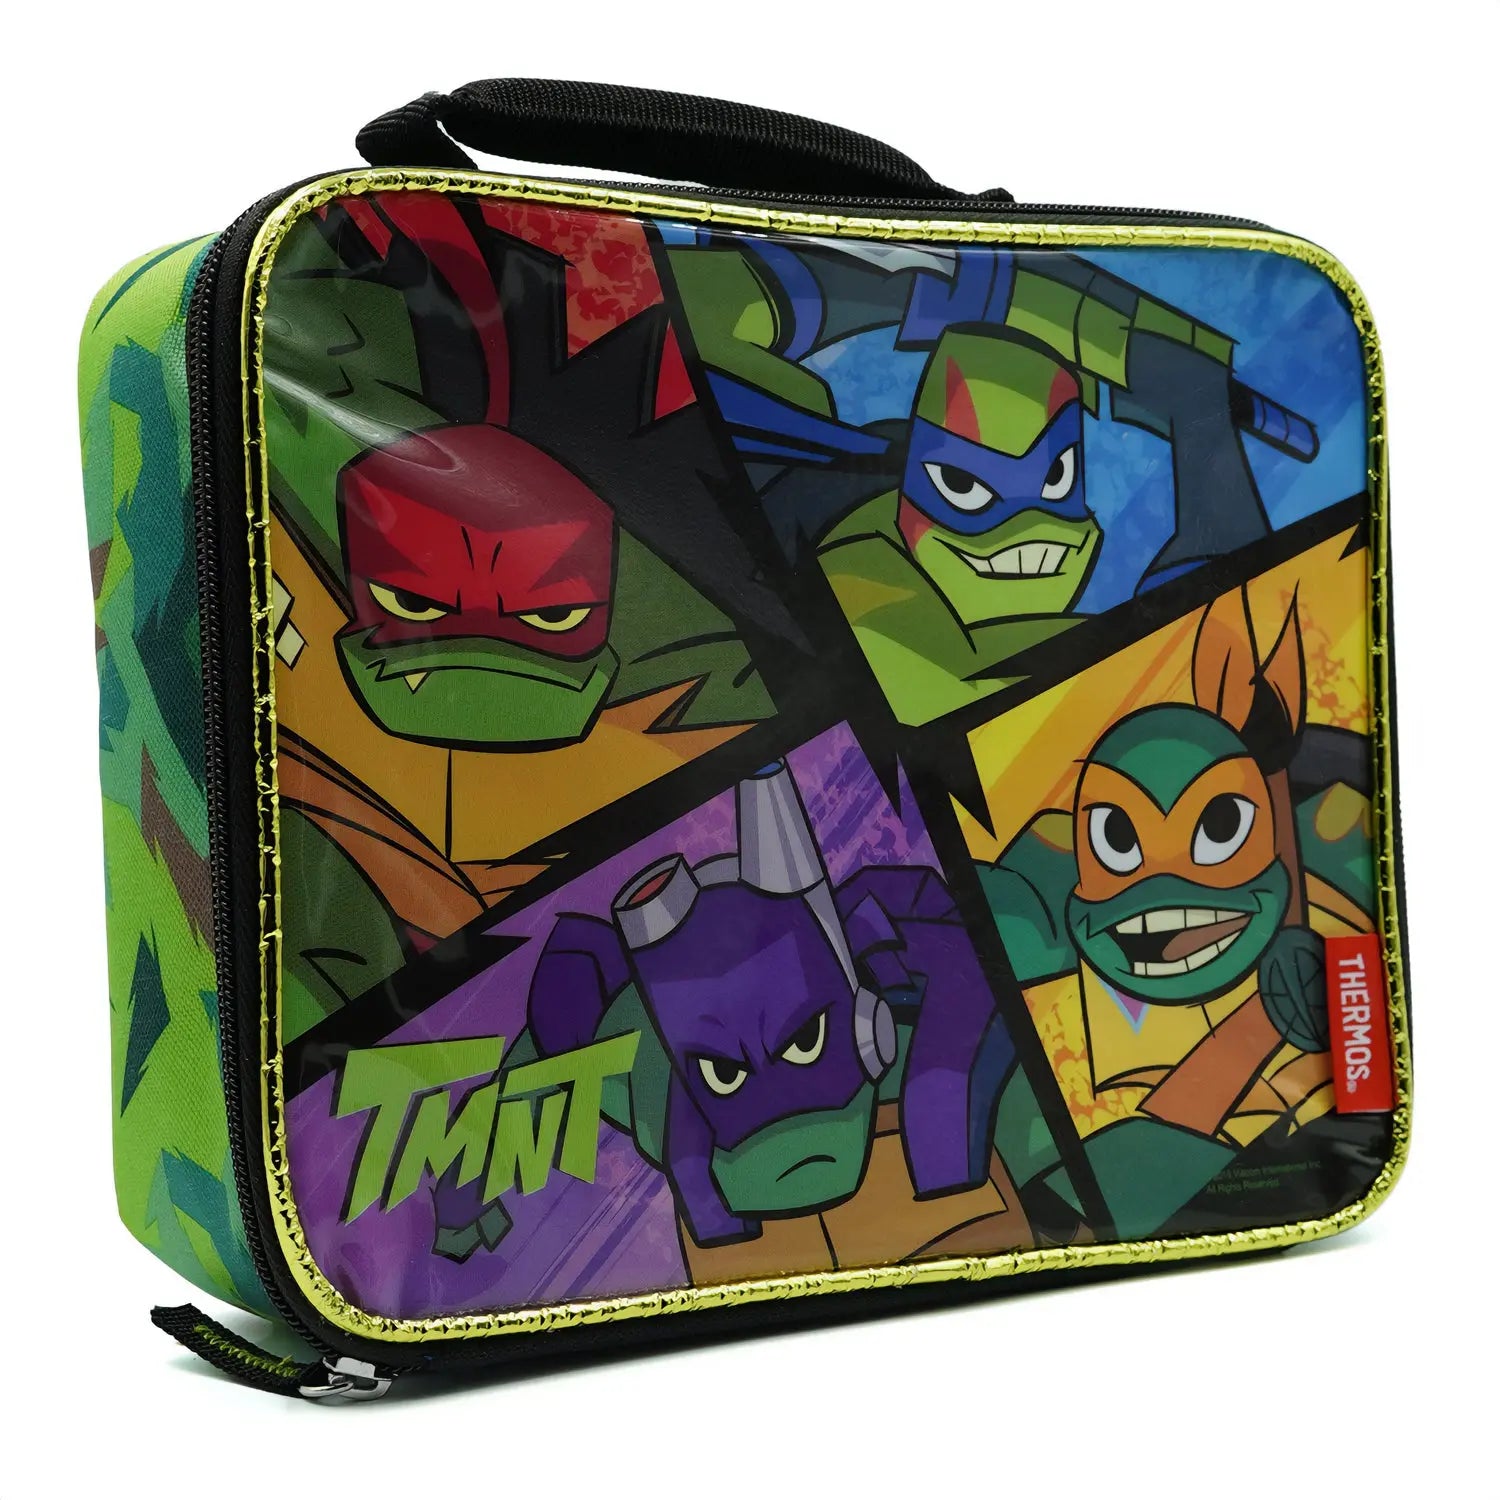 Thermos Kid's Soft Lunch Box - Teenage Mutant Ninja Turtles Thermos